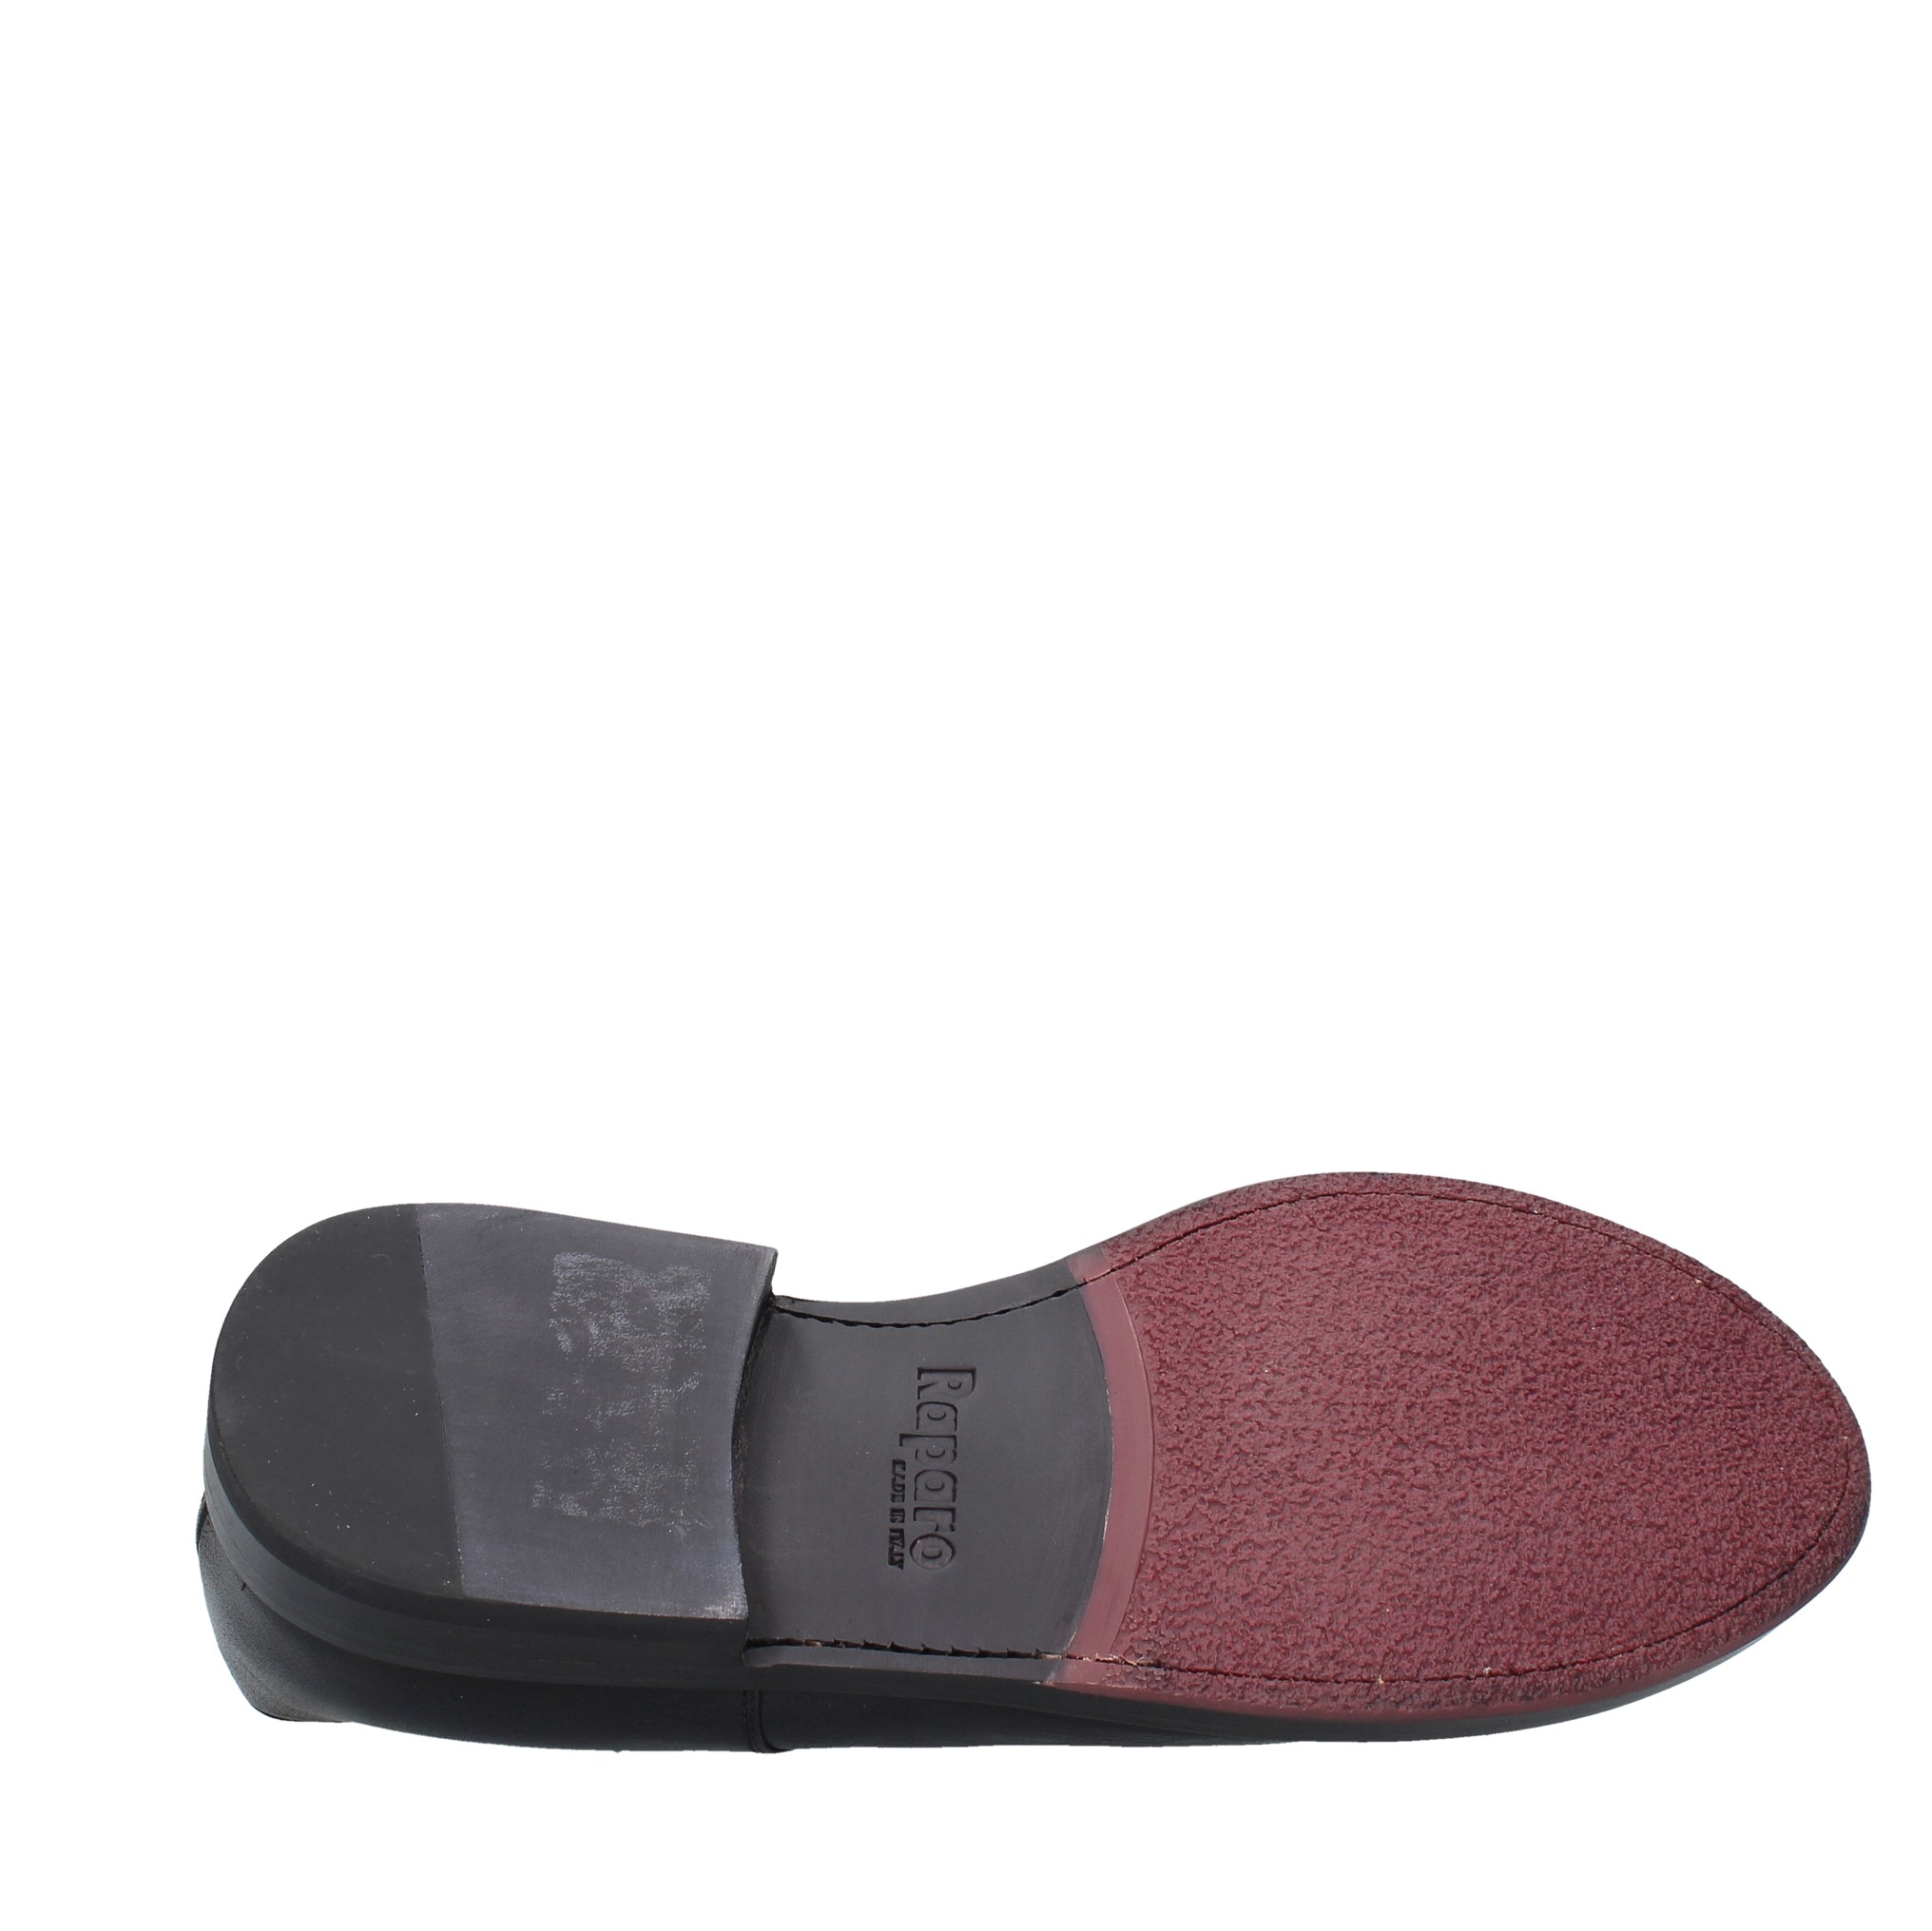 Laced shoes Black - RAPARO - Ginevra calzature